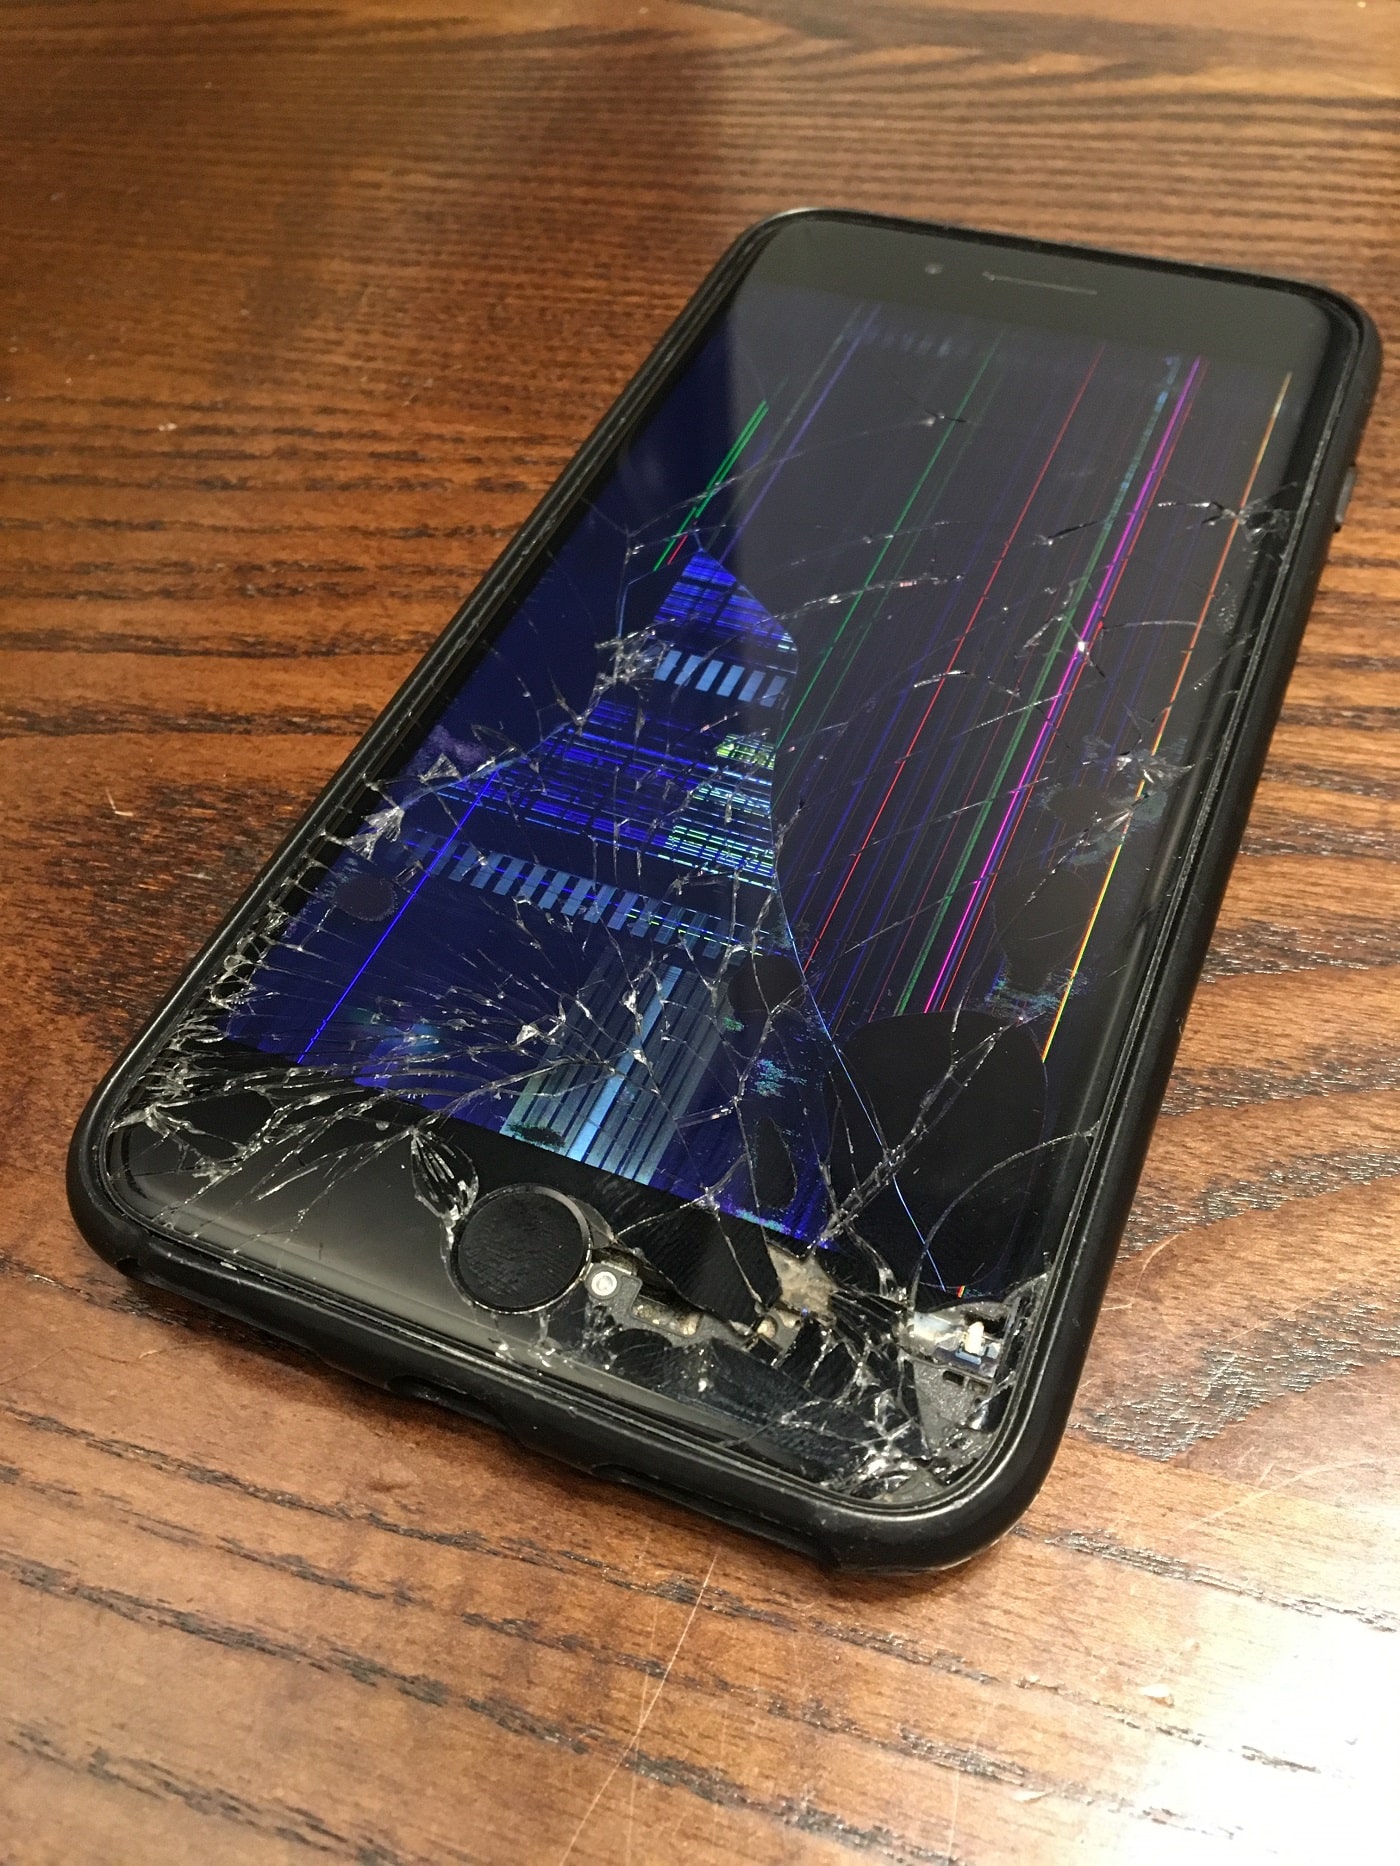 Royal Oak Cracked iPhone Screen Repair - Detroit's Best Cracked iPhone